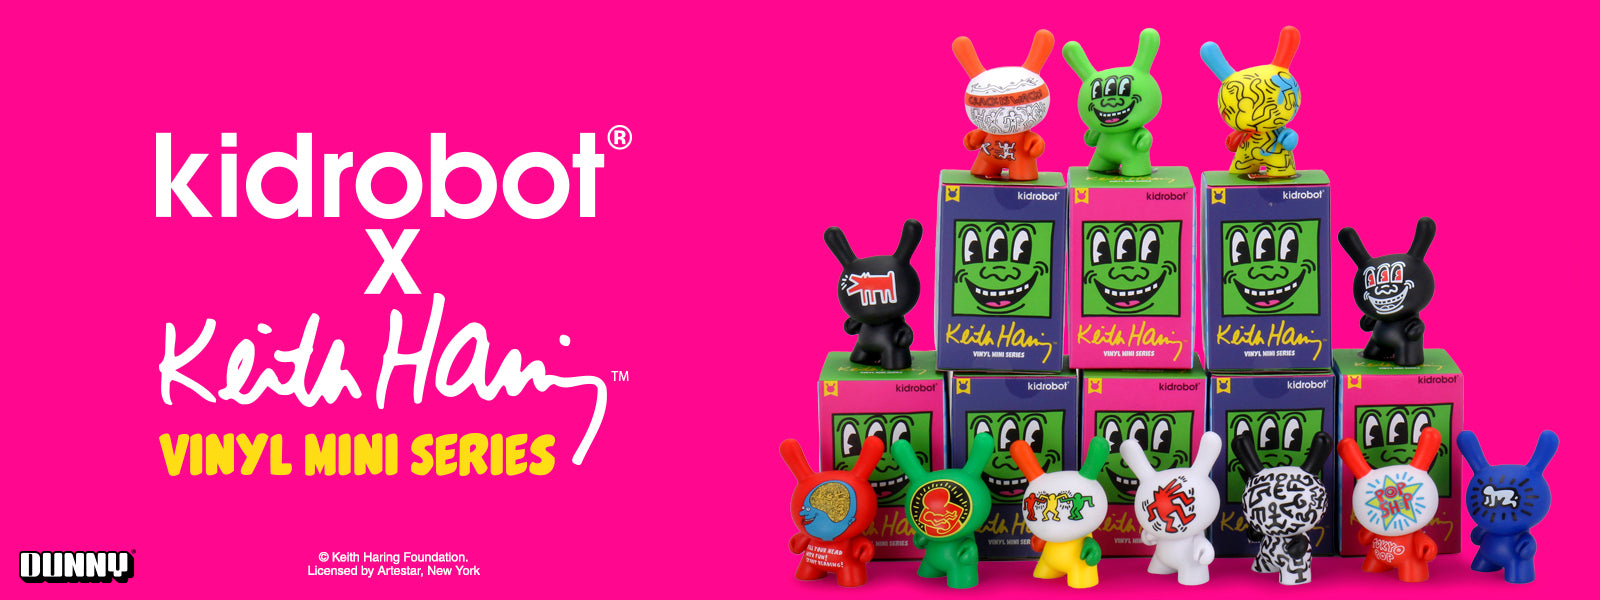 kidrobot toys for sale